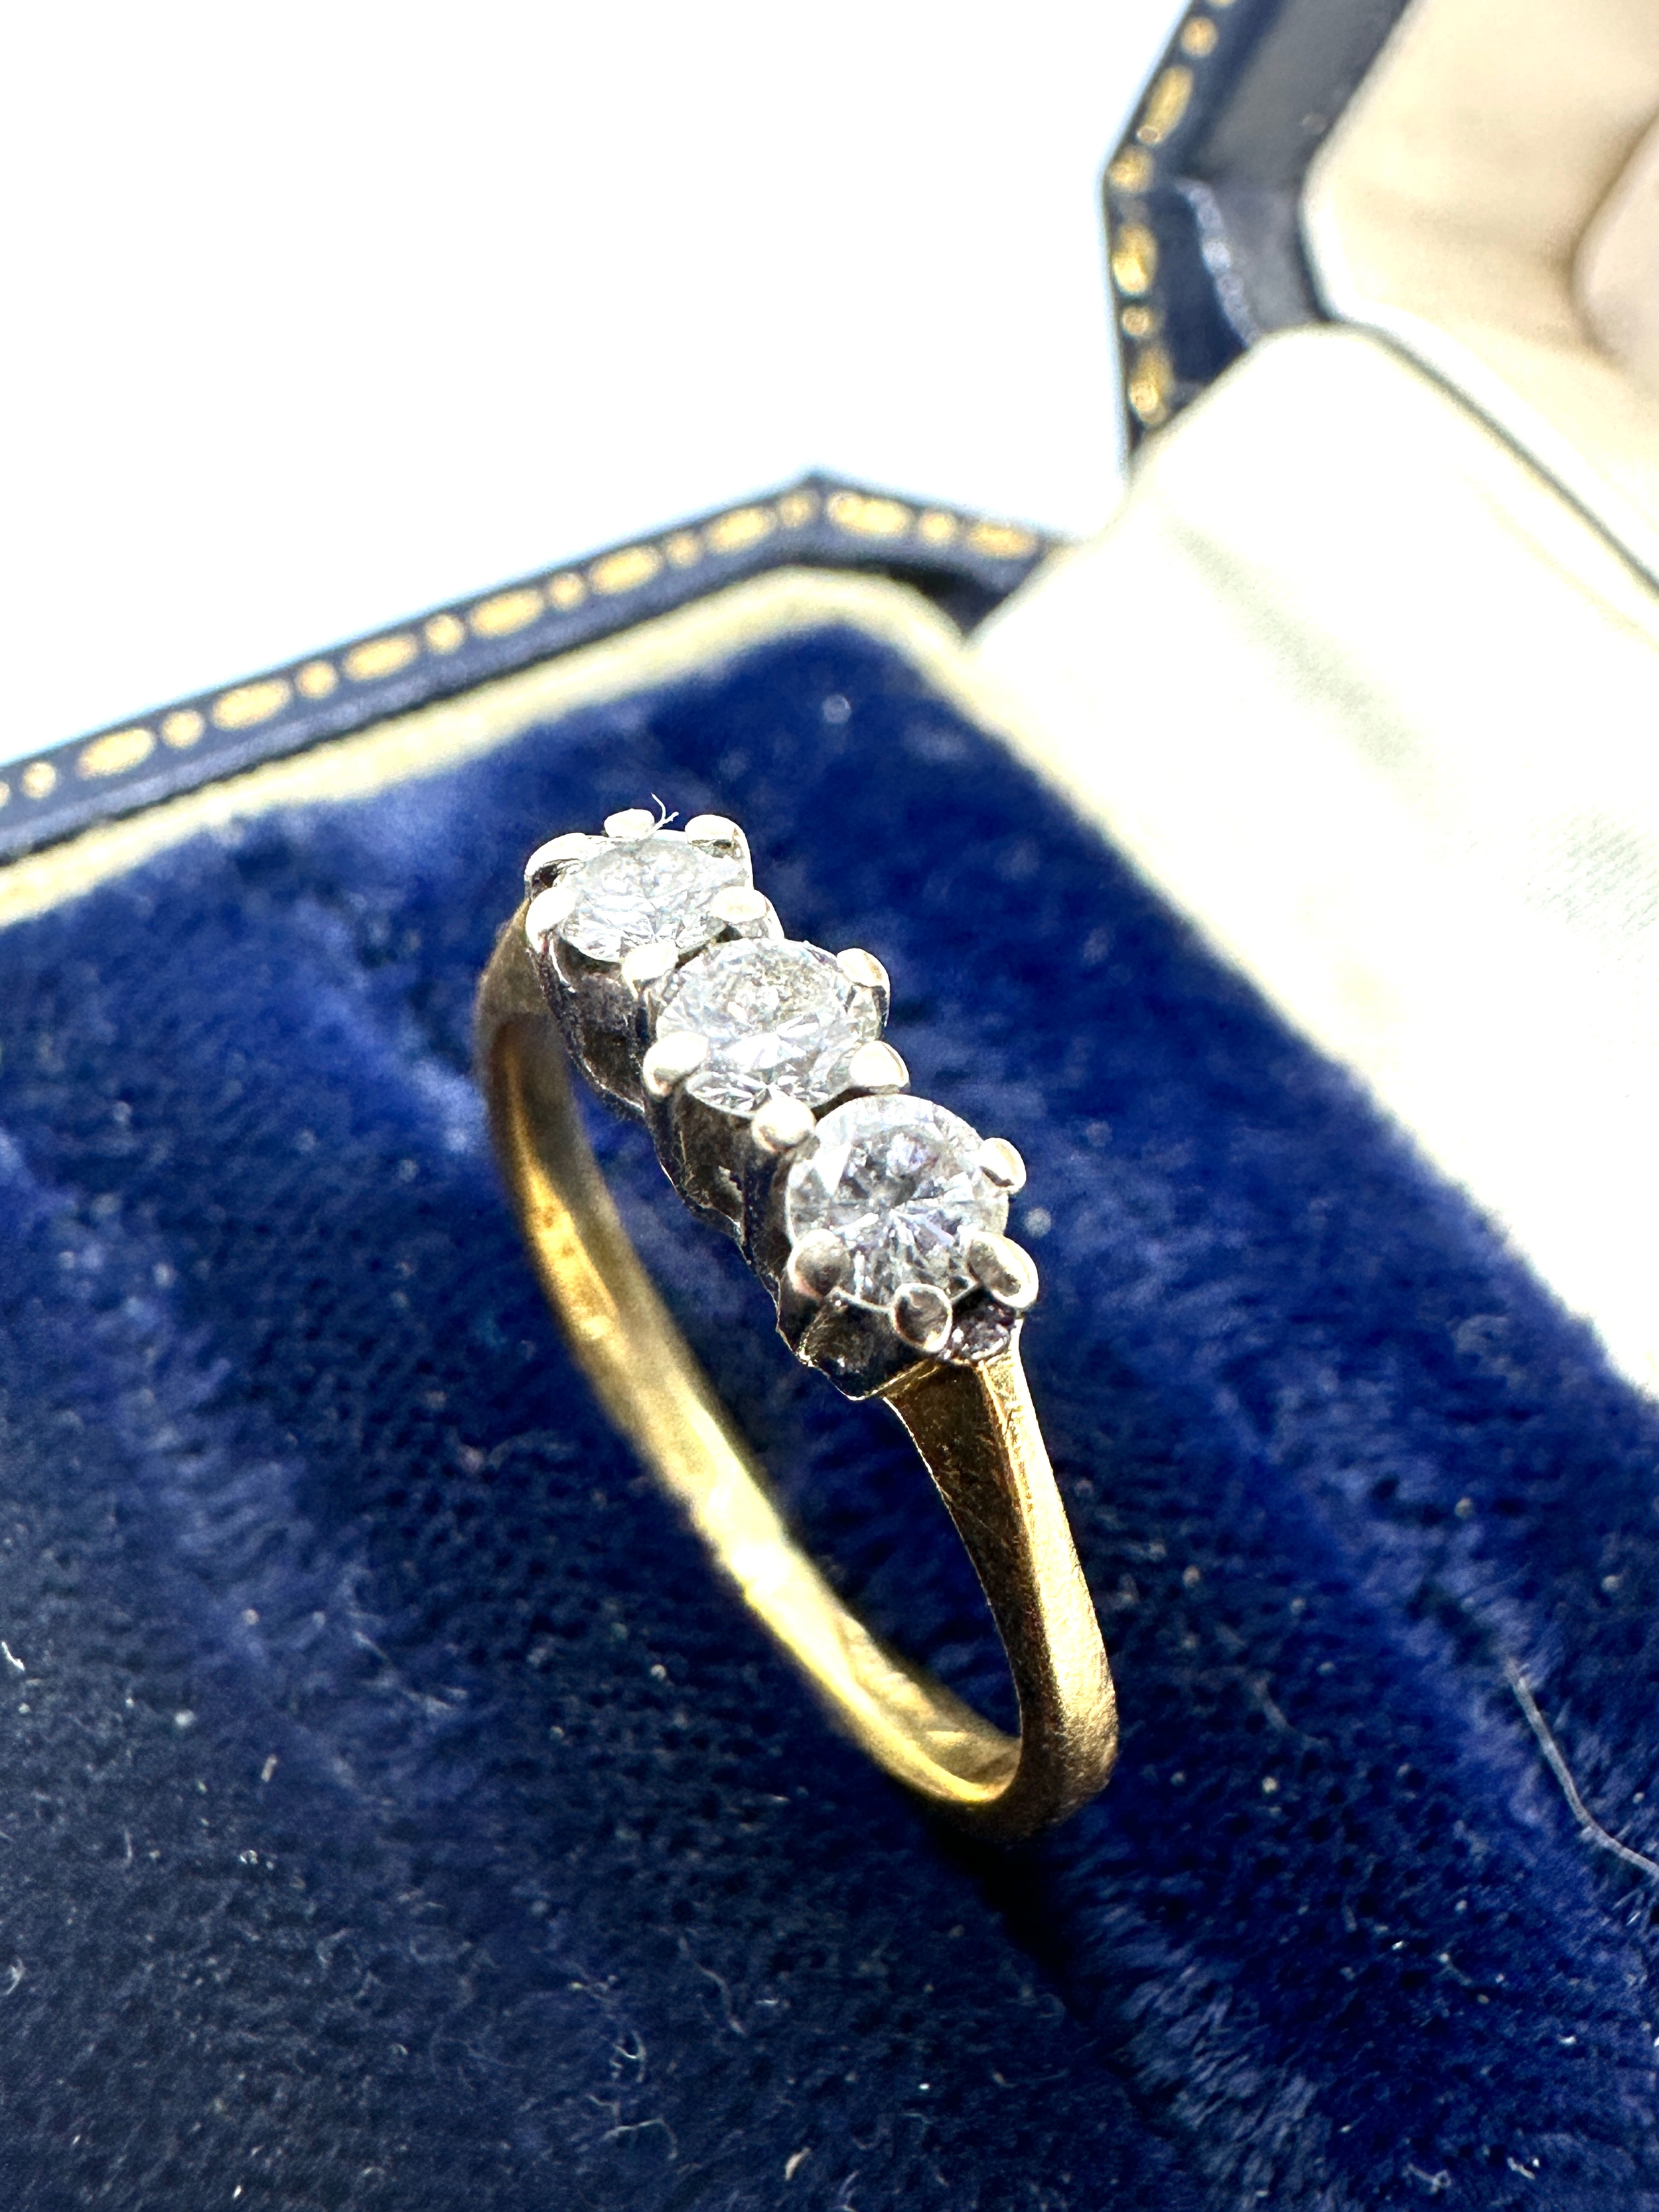 18ct gold diamond ring weight 2g - Image 2 of 4